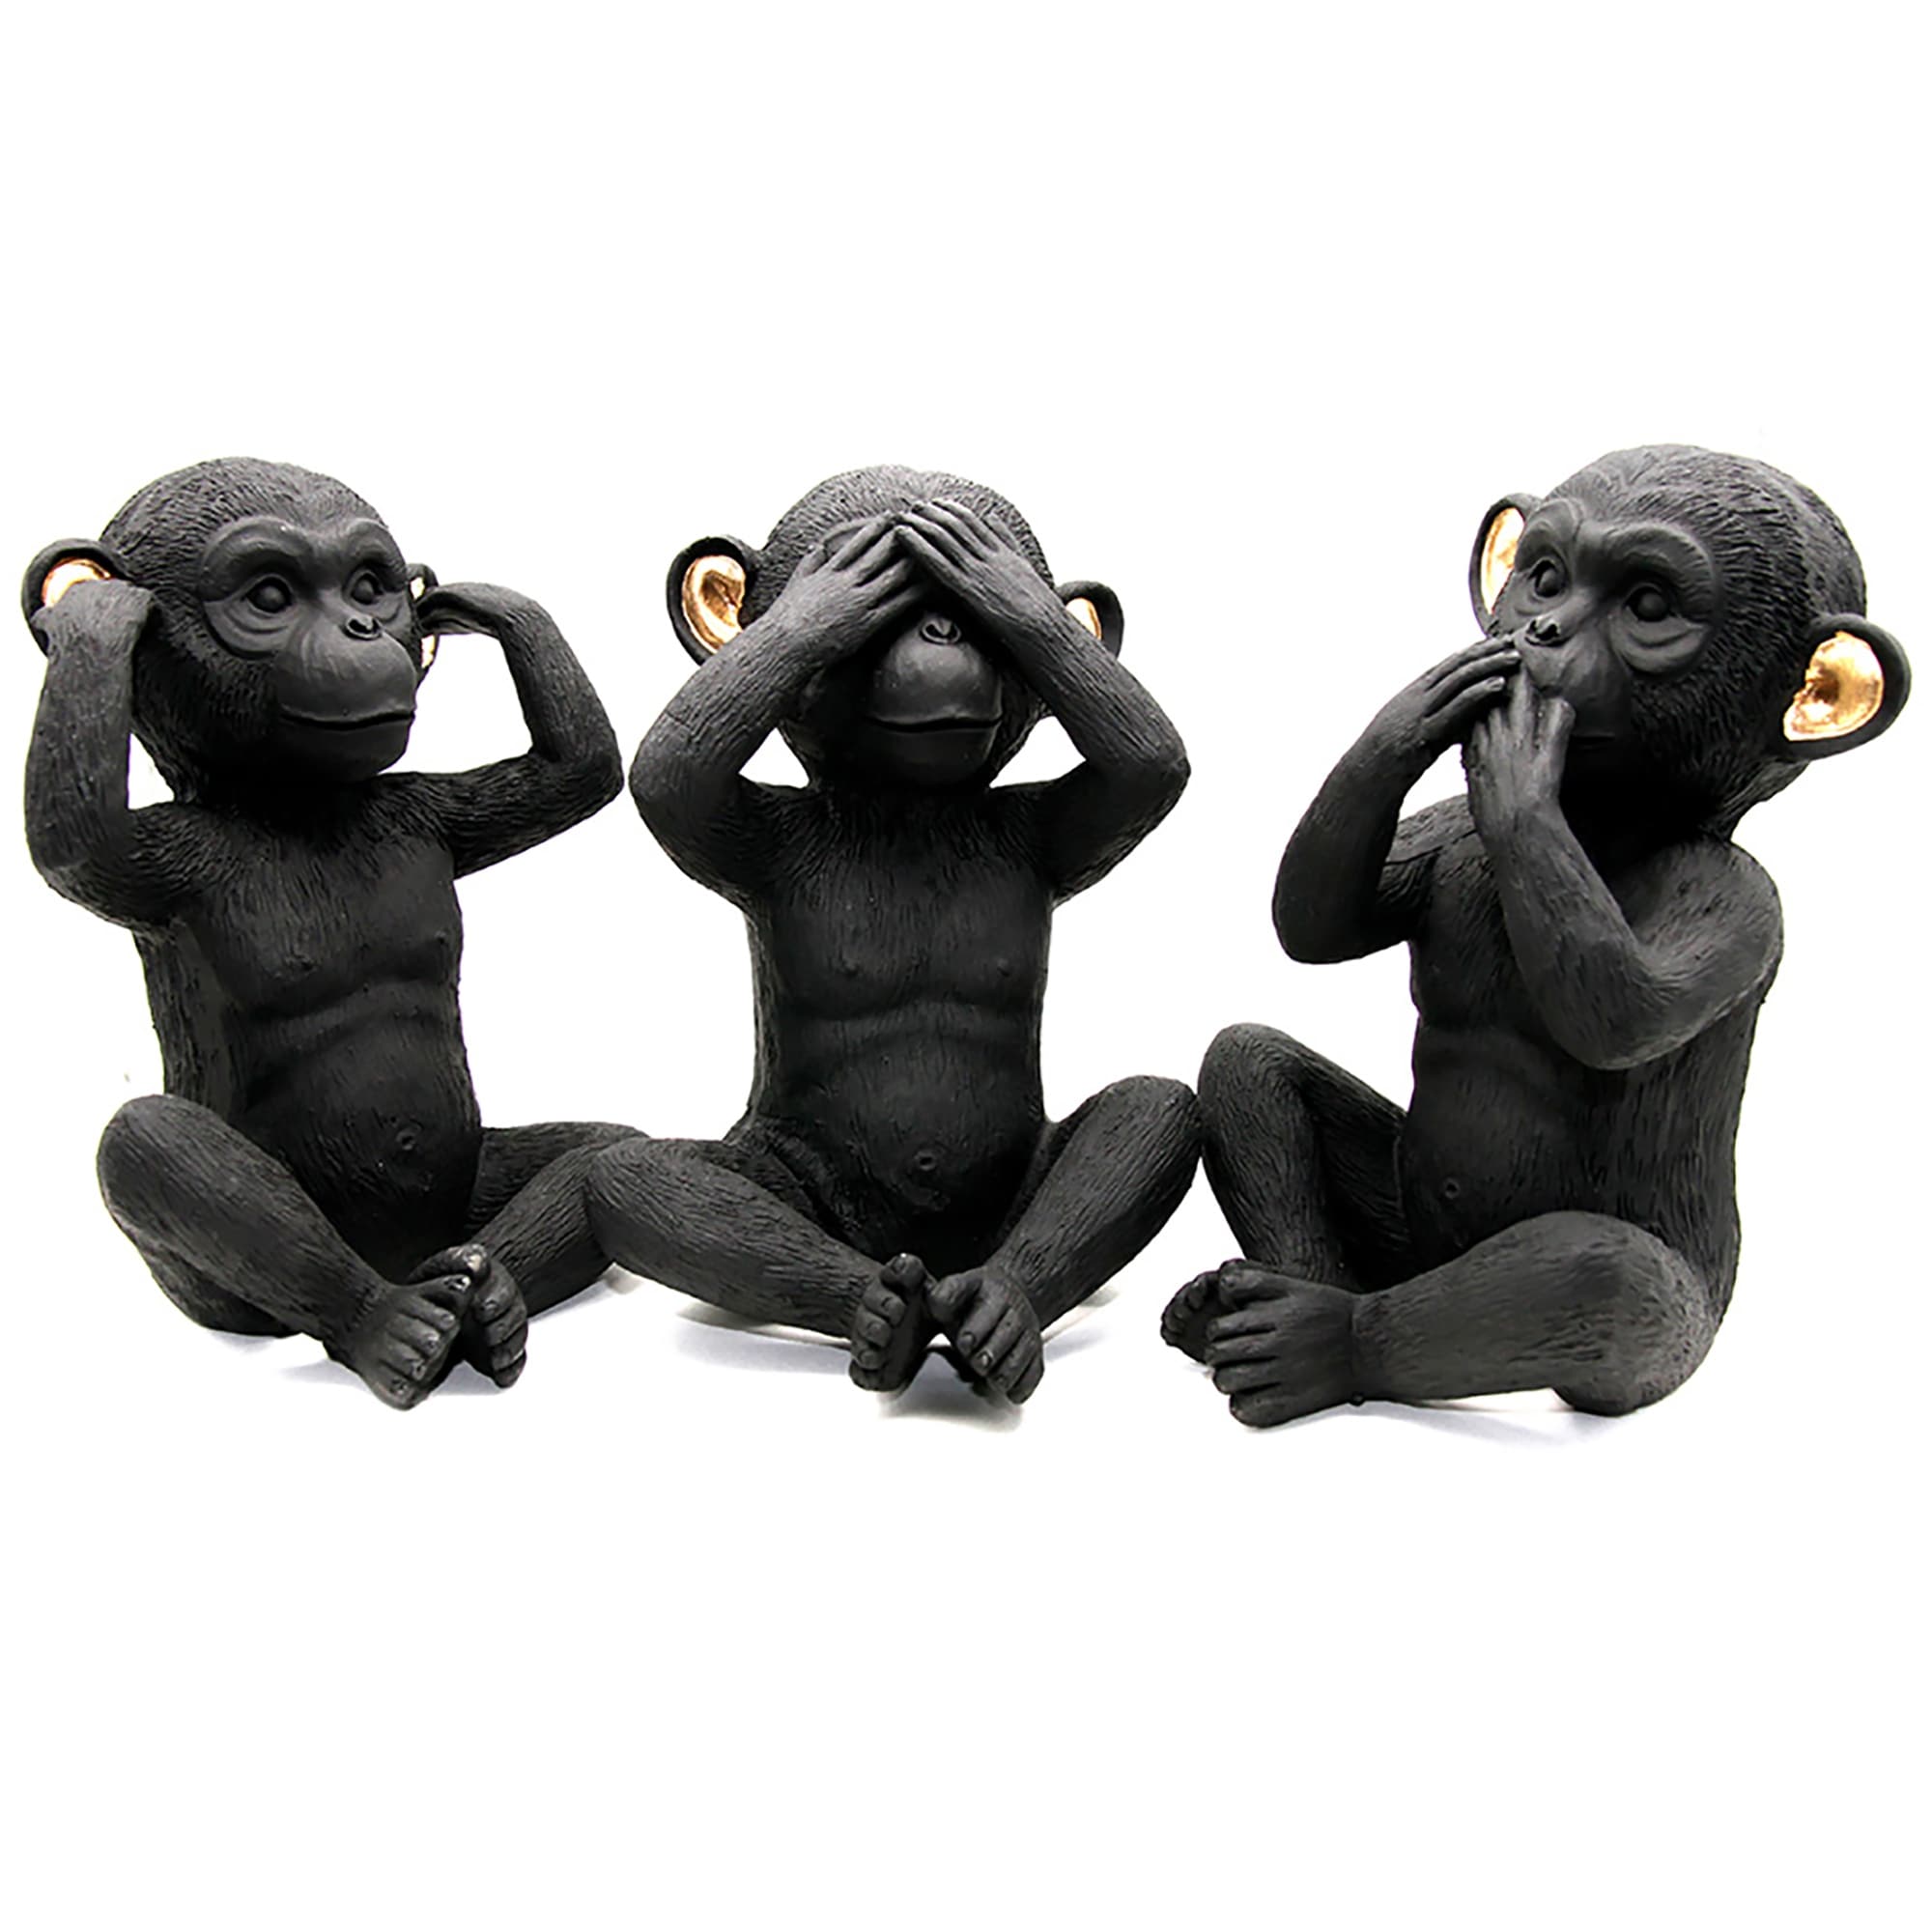 3 Wise Monkeys See Speak Hear "NO EVIL" Home House Ornament Figurine 3 pcs set 